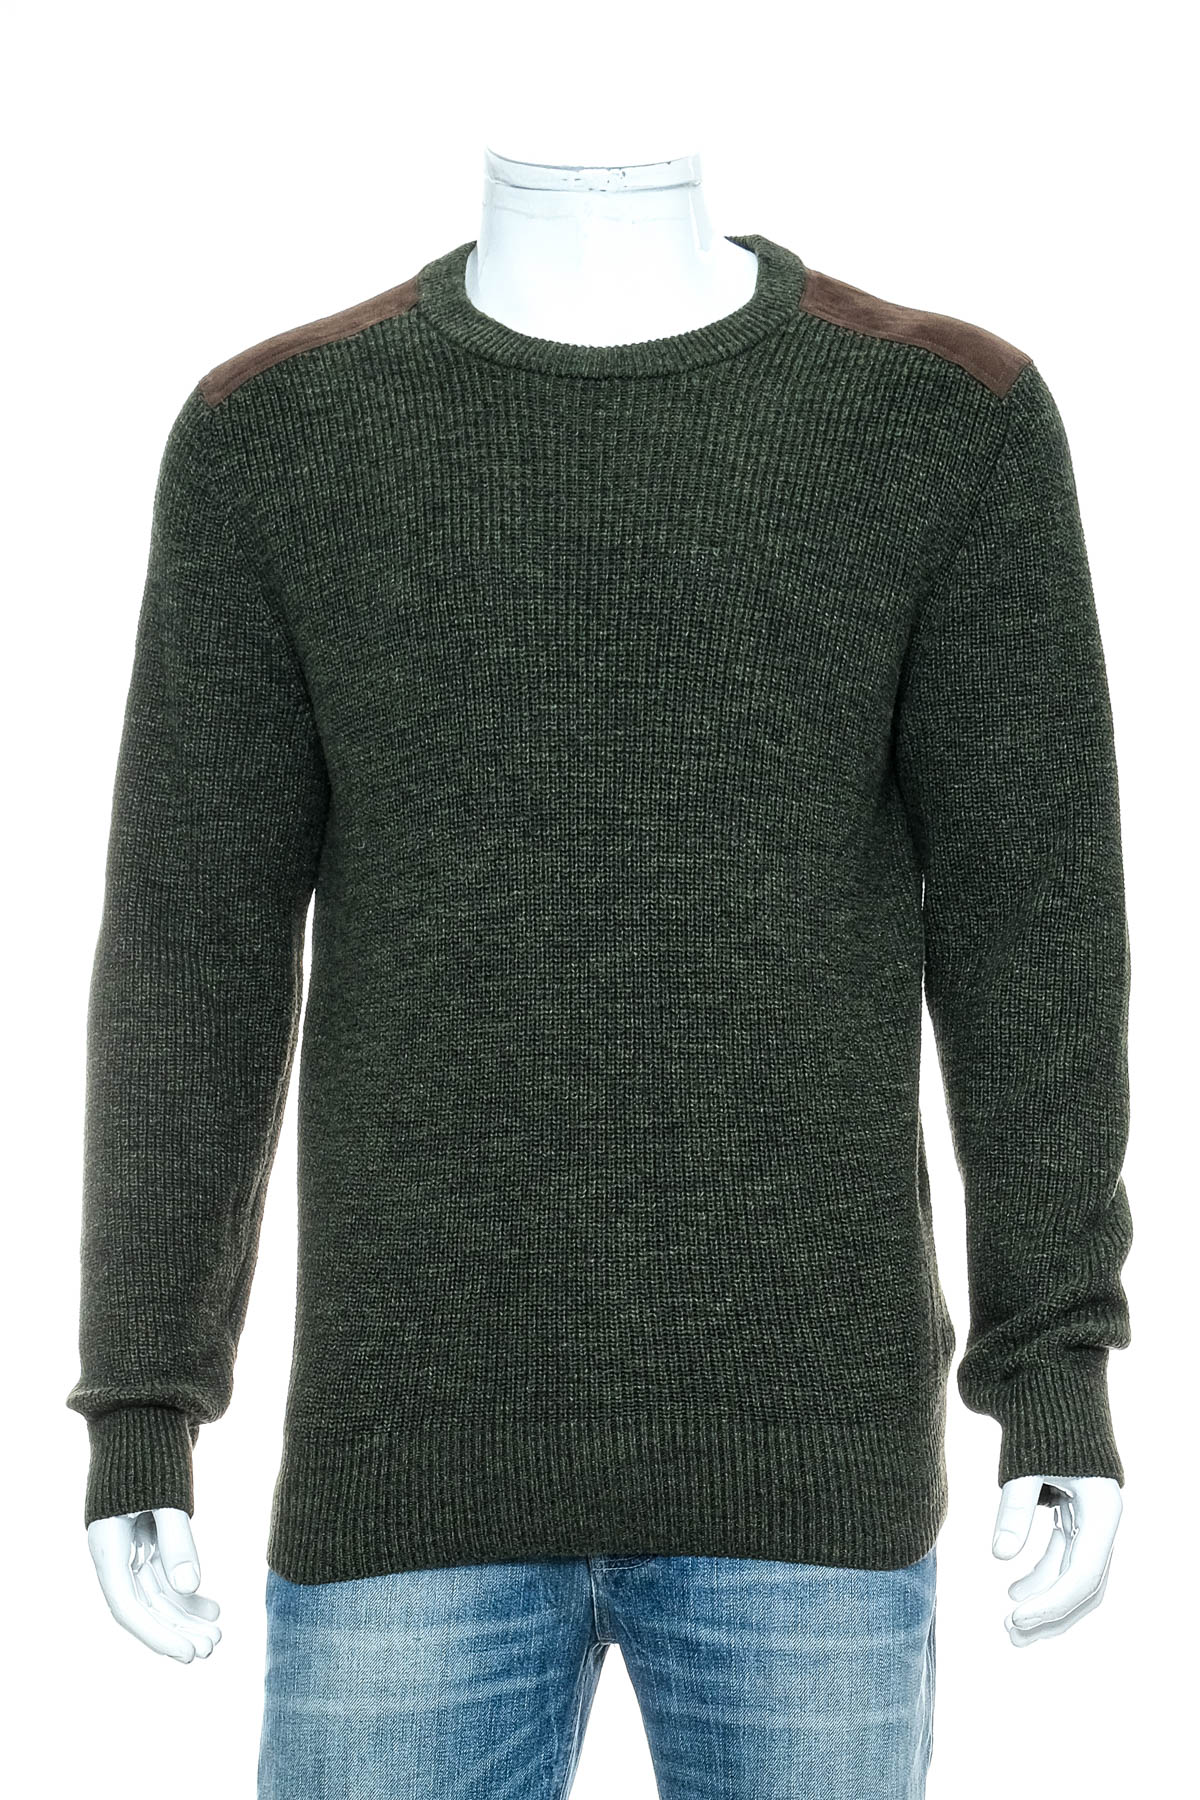 Men's sweater - GAZMAN - 0